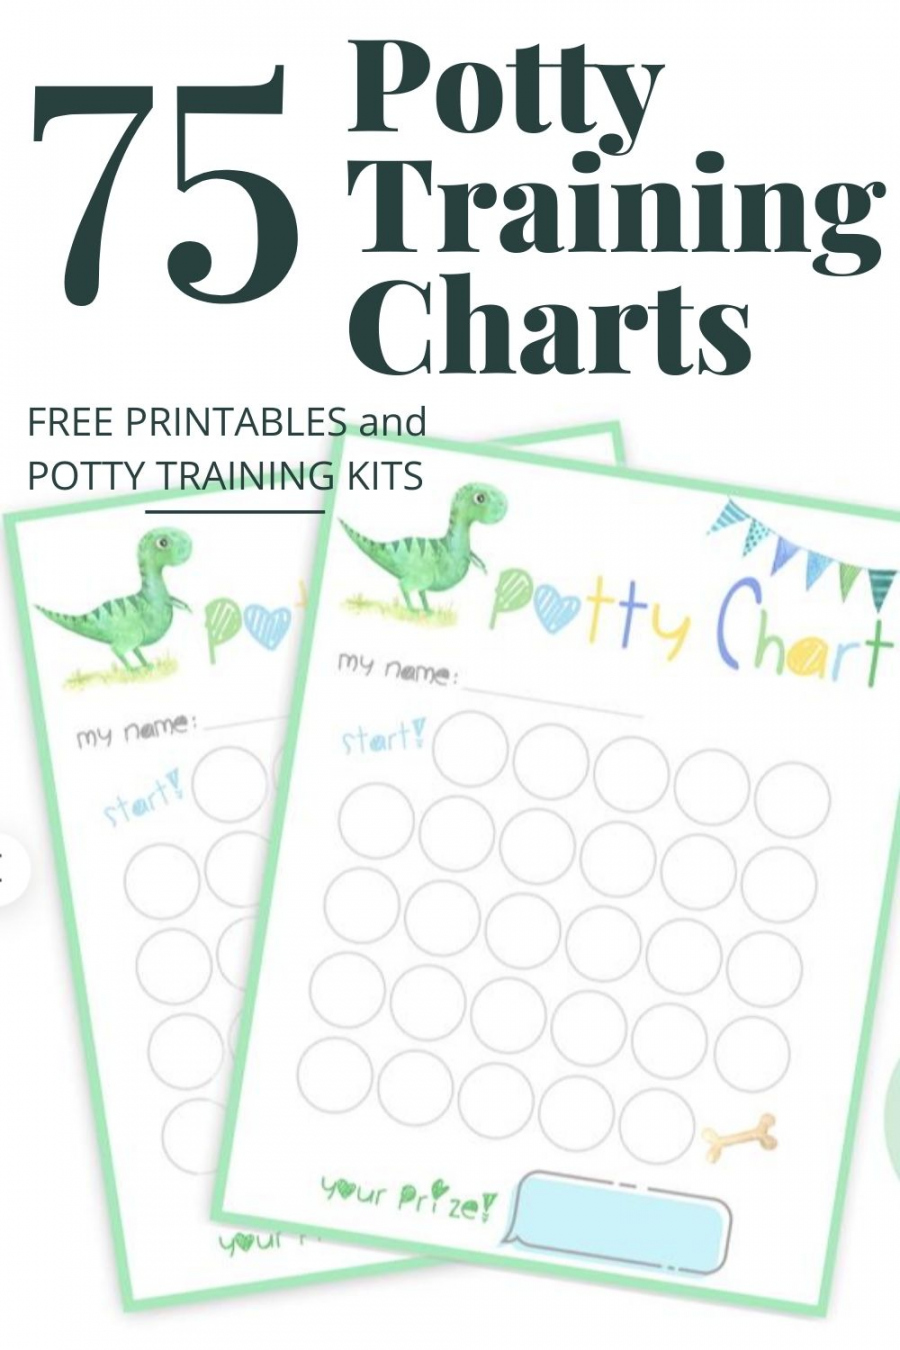 Free Printable Potty Training Charts for Boys & Girls - FREE Printables - Free Printable Potty Training Charts